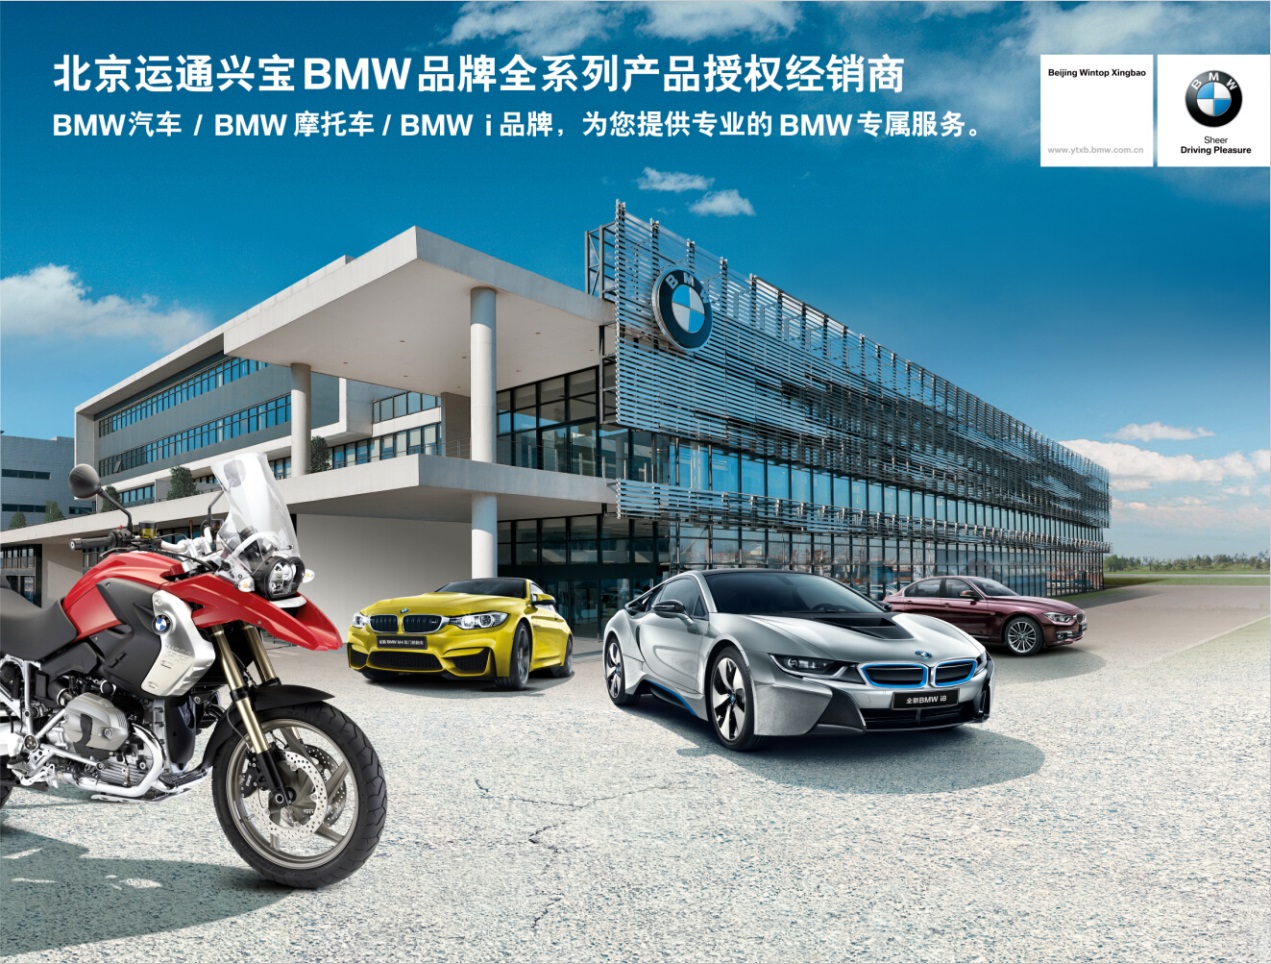 BMW 2系旅行车引领时尚家庭出行新风尚-北京